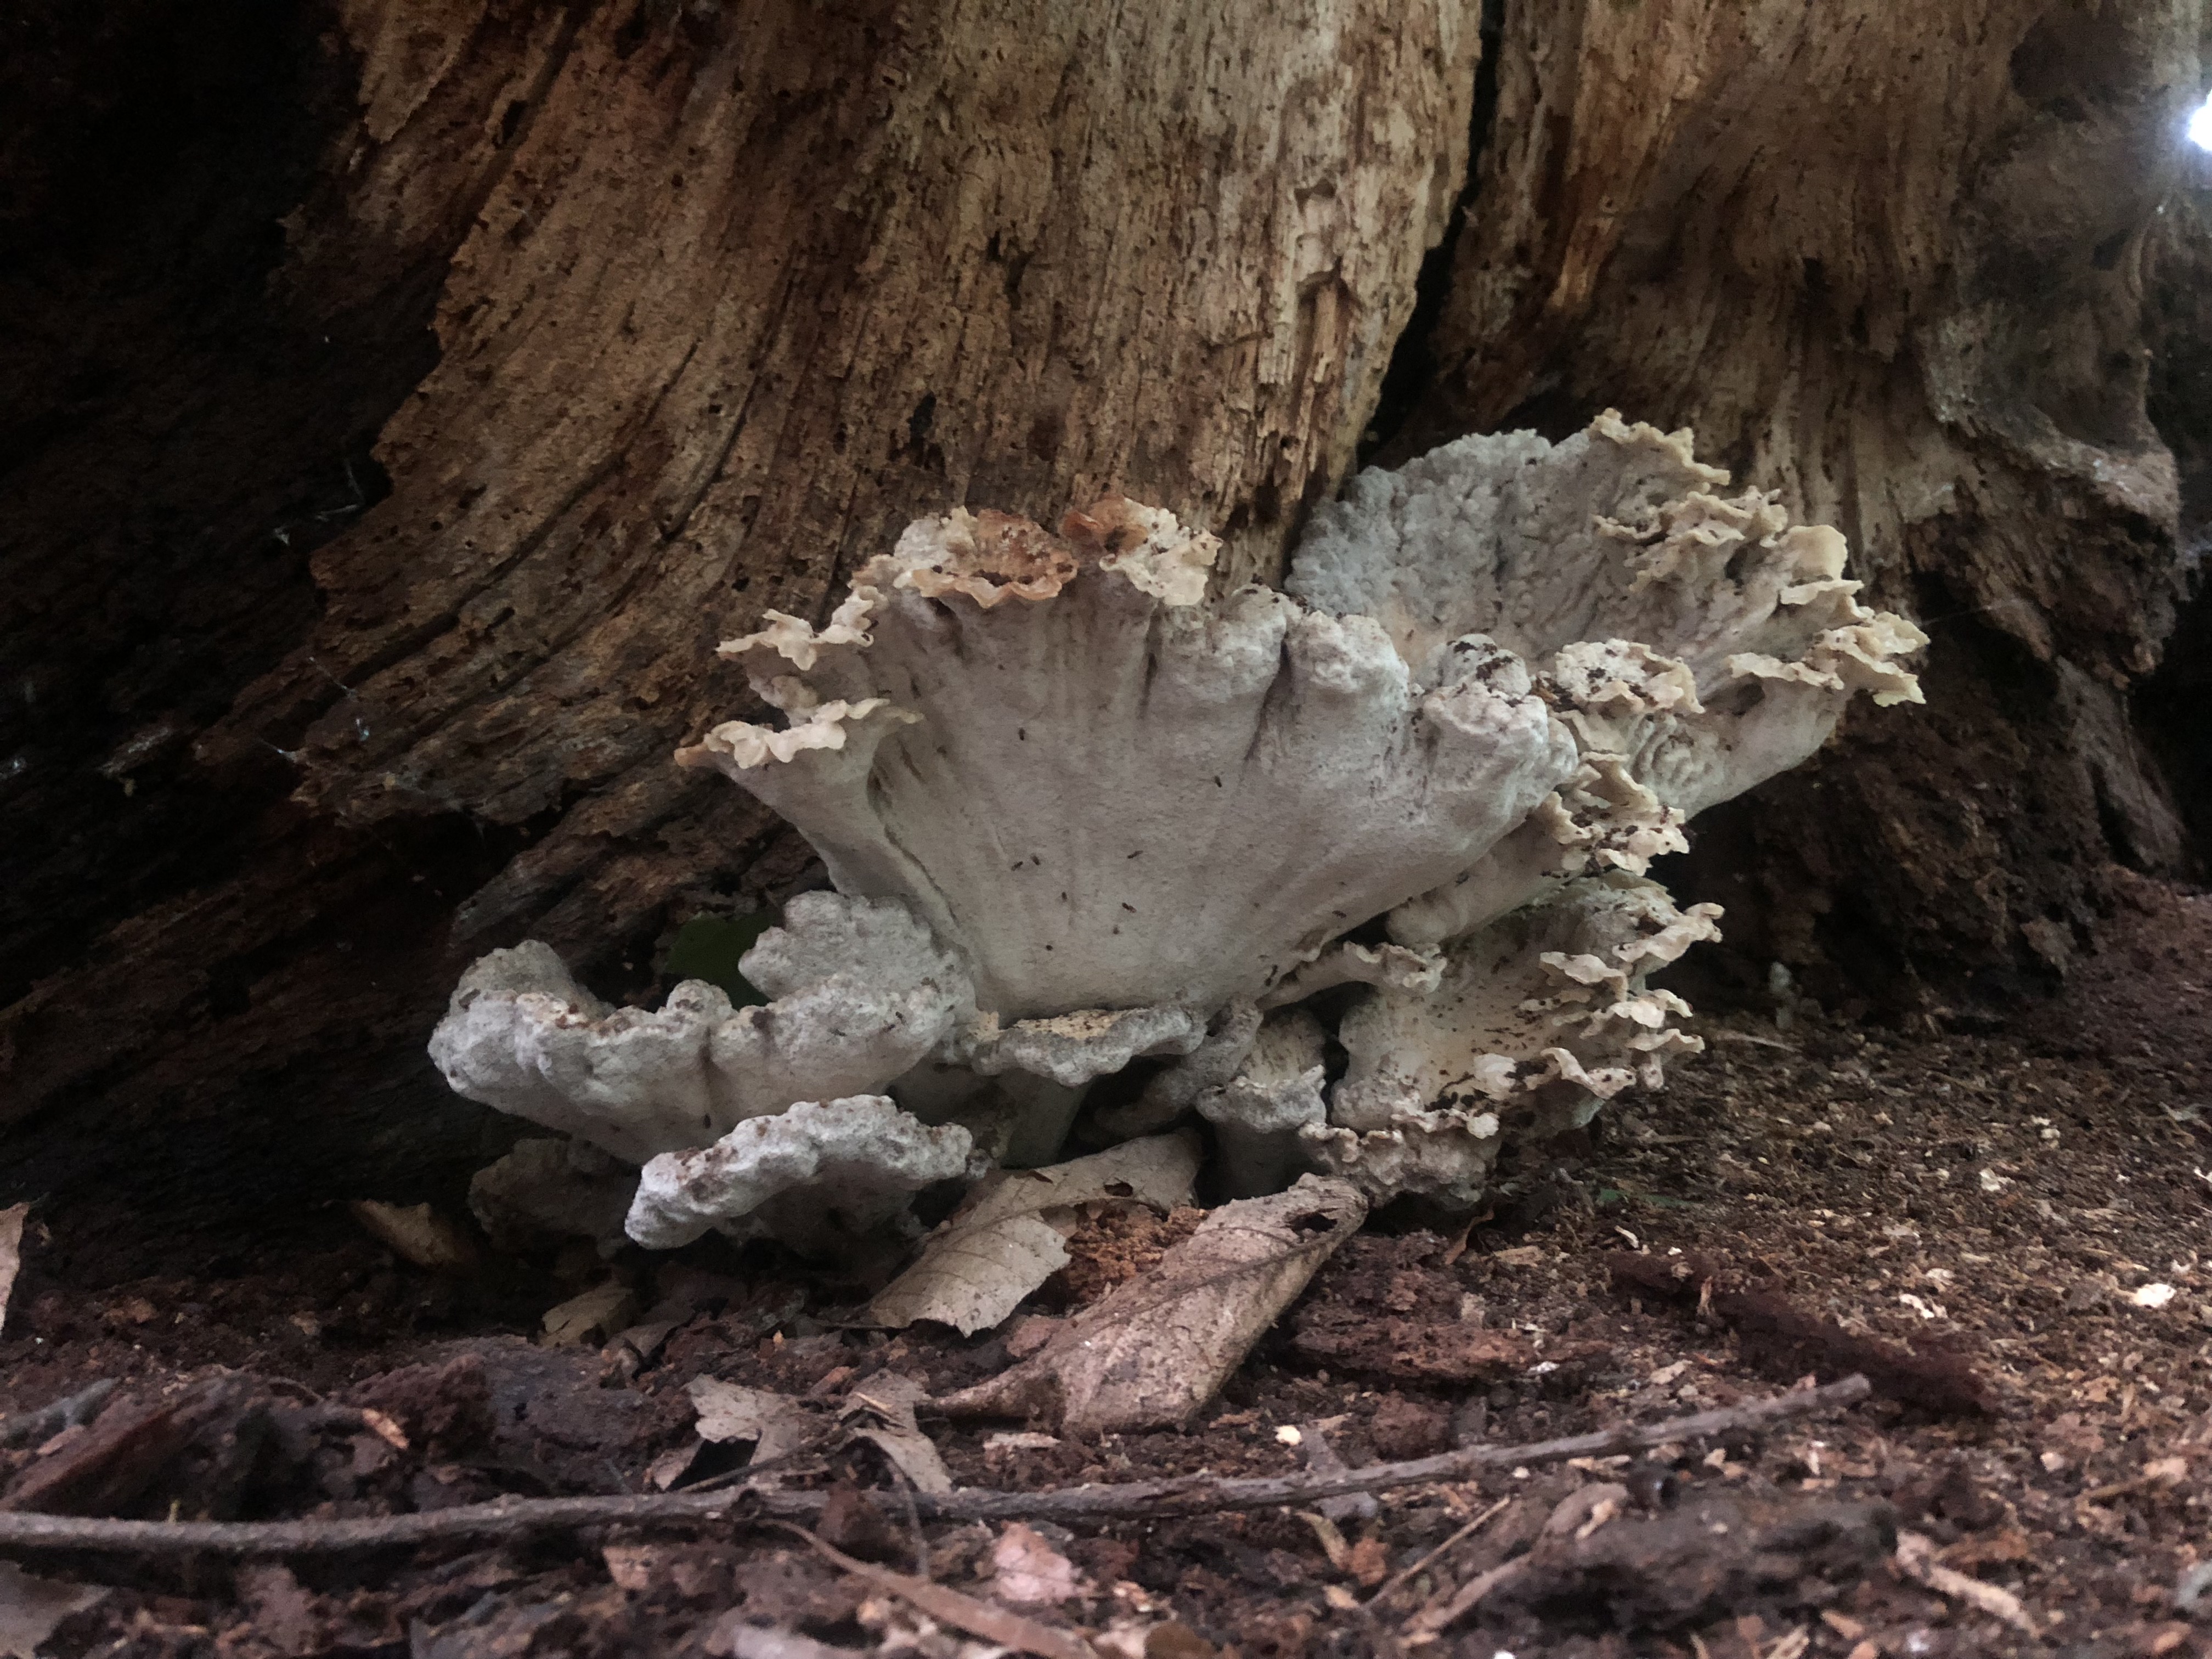 White fungi growing on decaying wood.